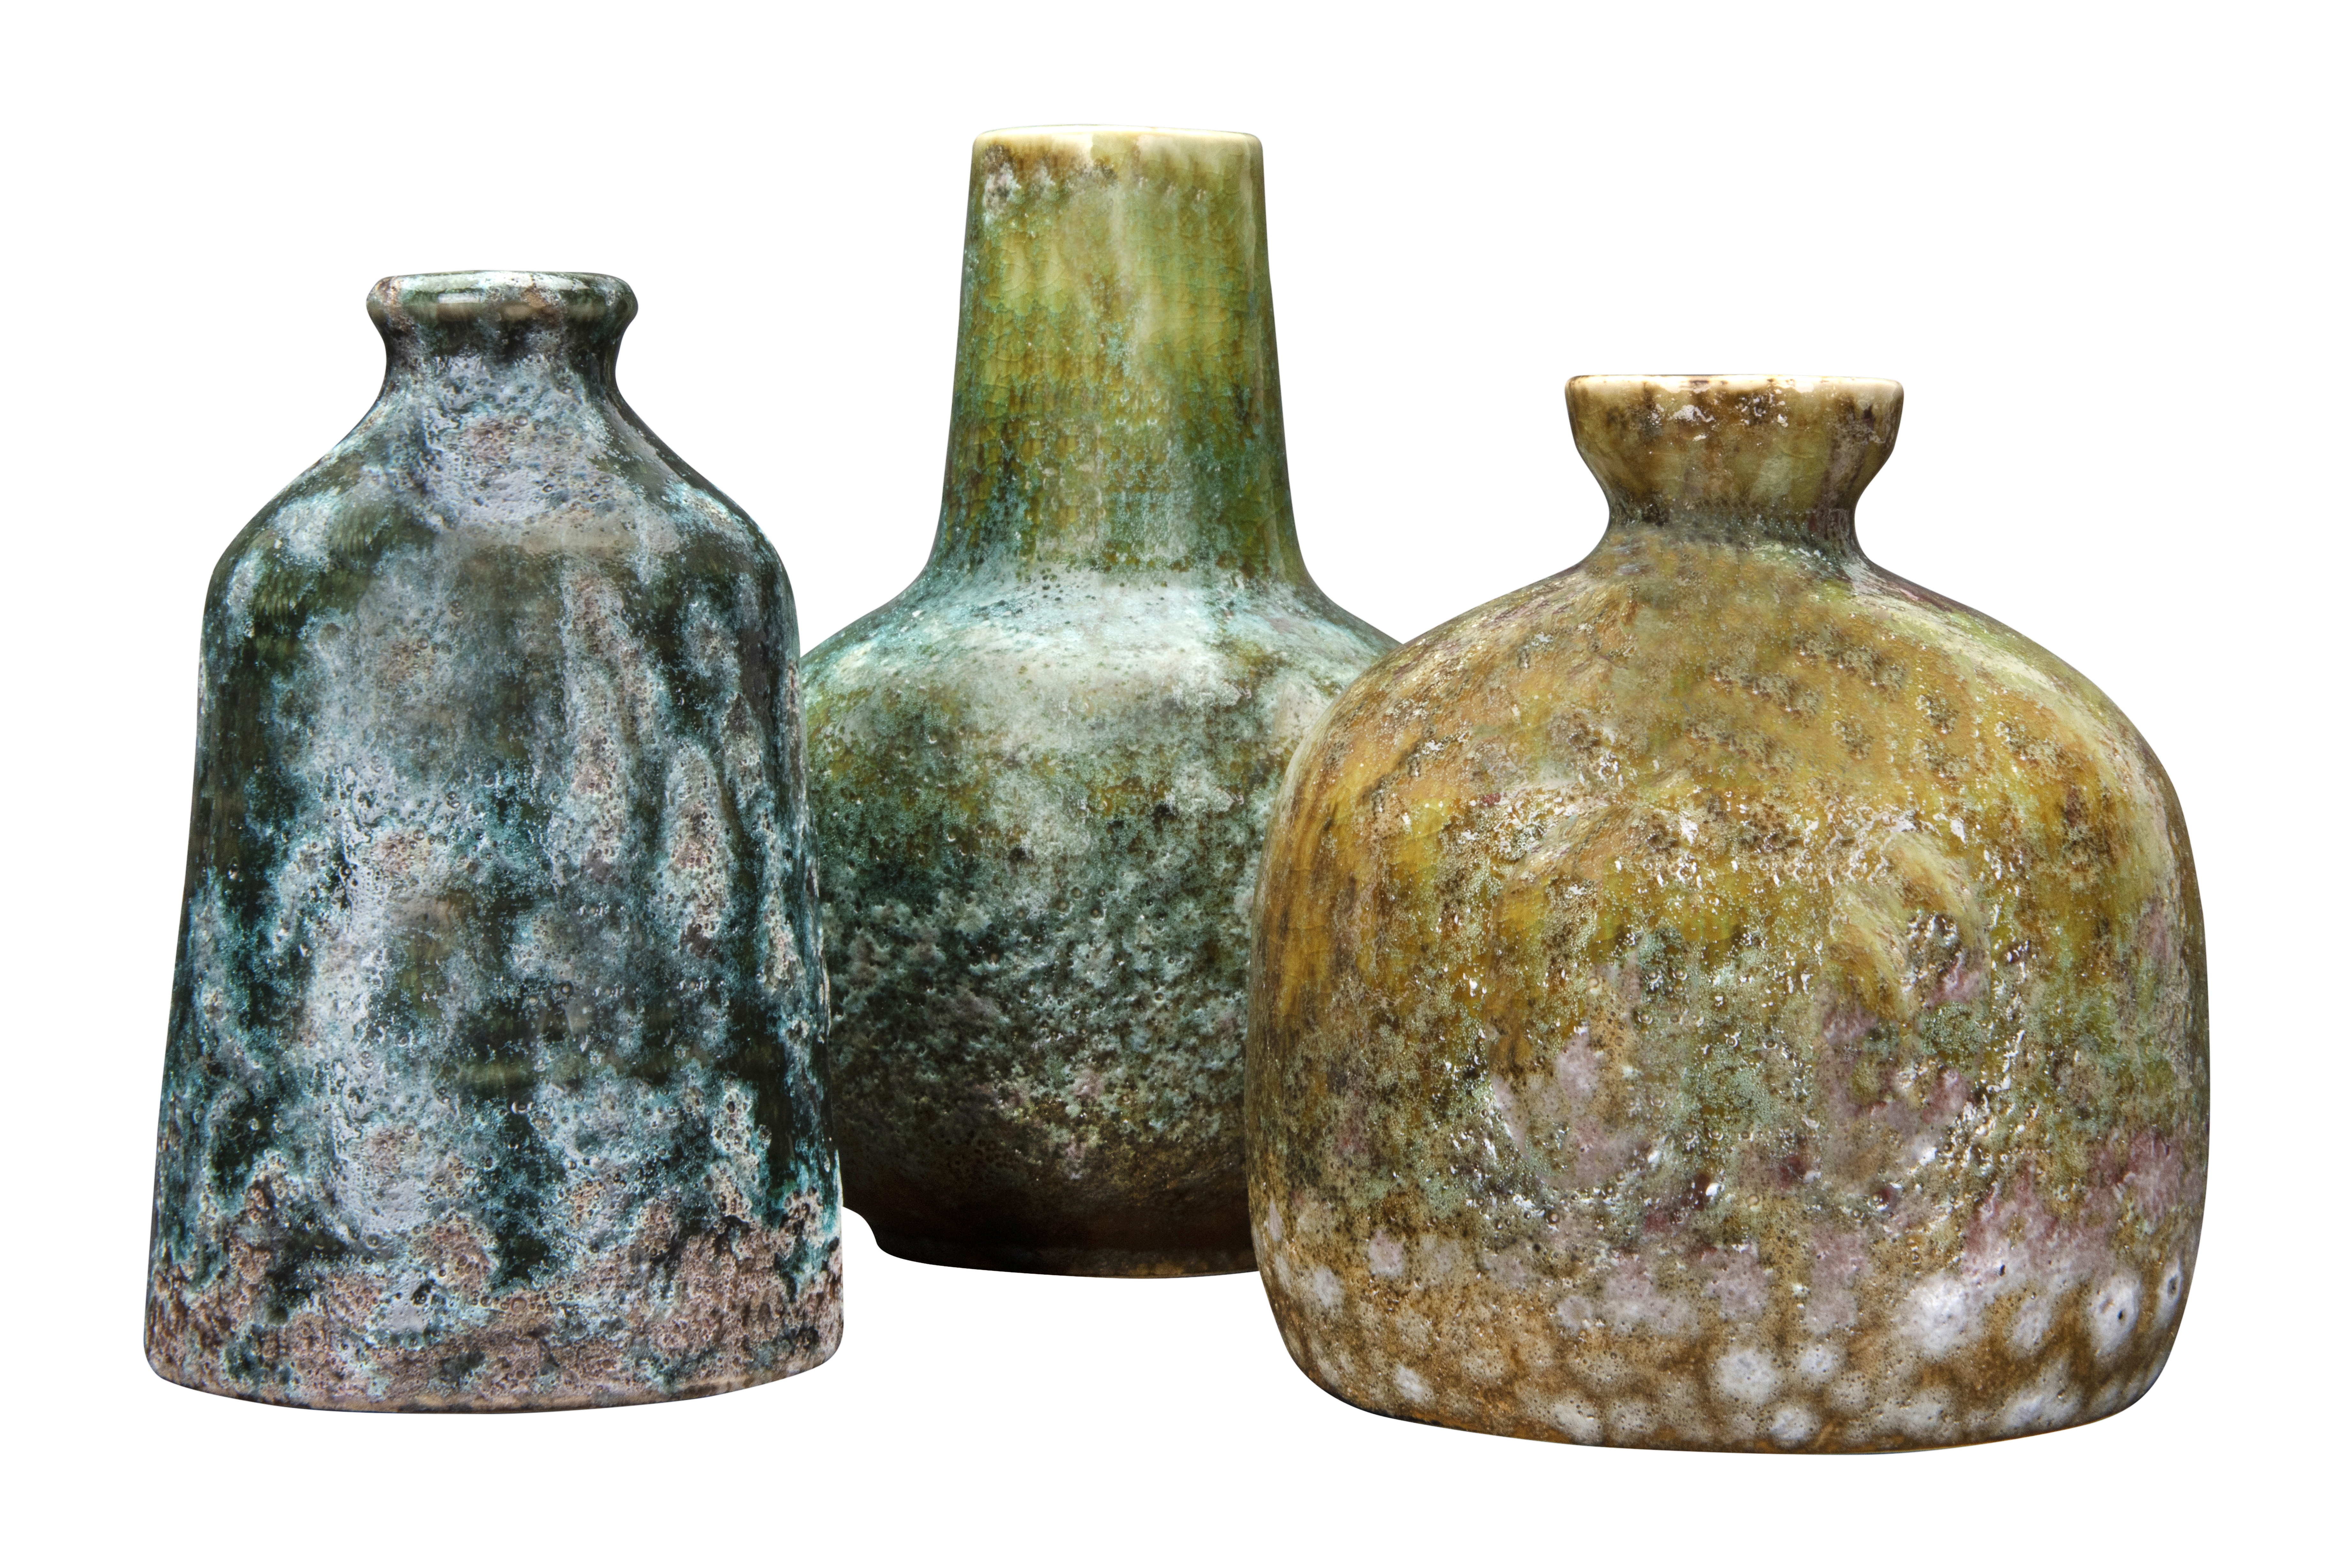 Green & Blue Textured Stoneware Vases (Set of 3 Shapes) - Image 0